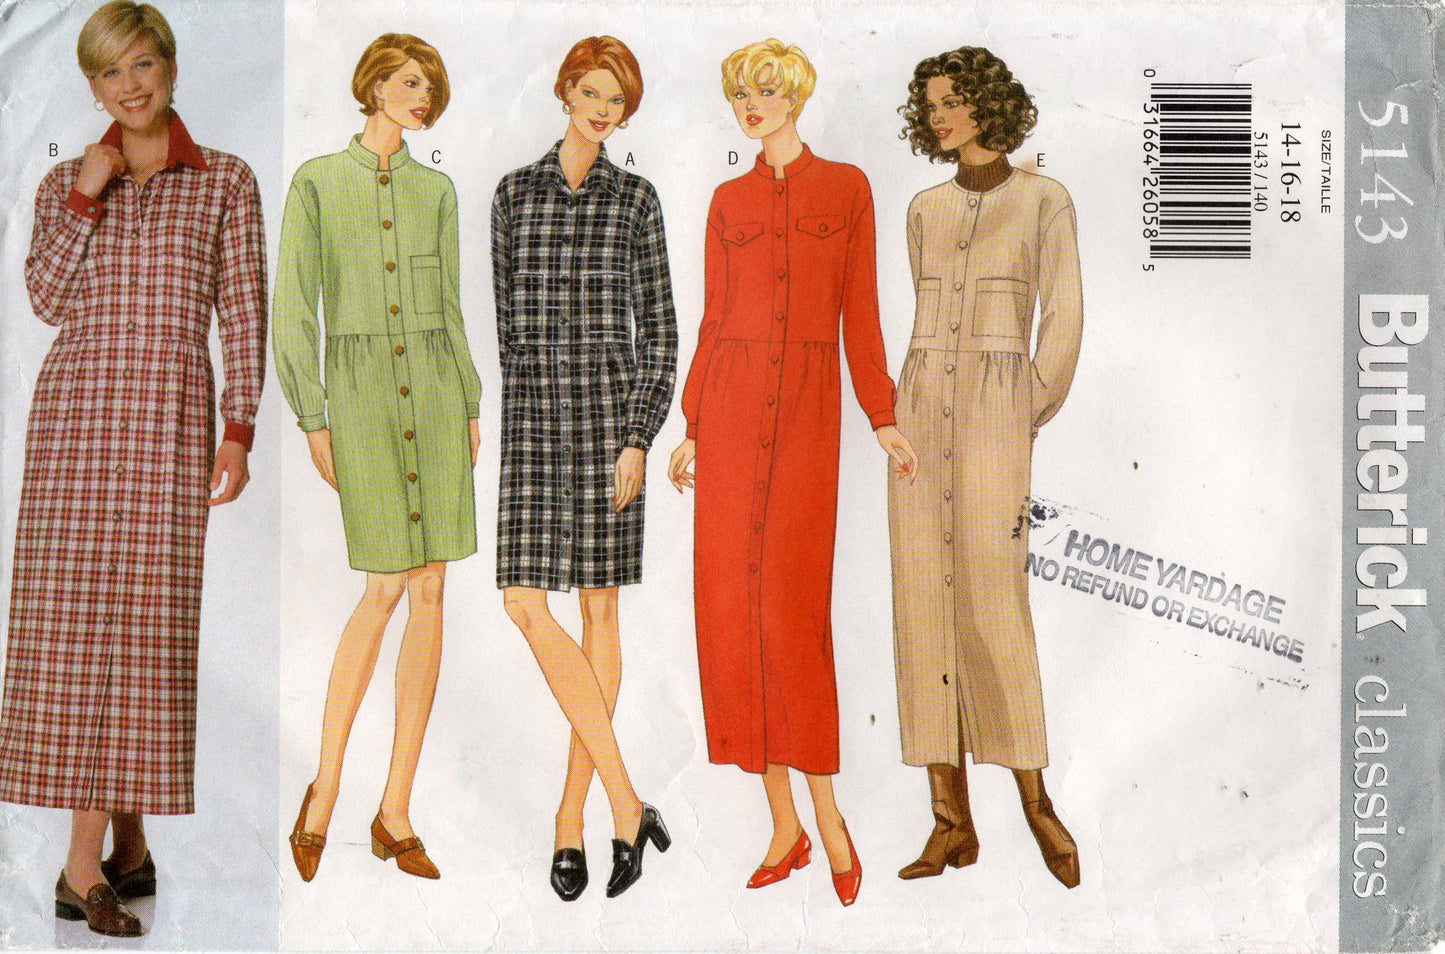 Butterick 5143 Womens Dropped Waist Shirtdress 1990s Vintage Sewing Pattern Size 14 - 18 UNCUT Factory Folded